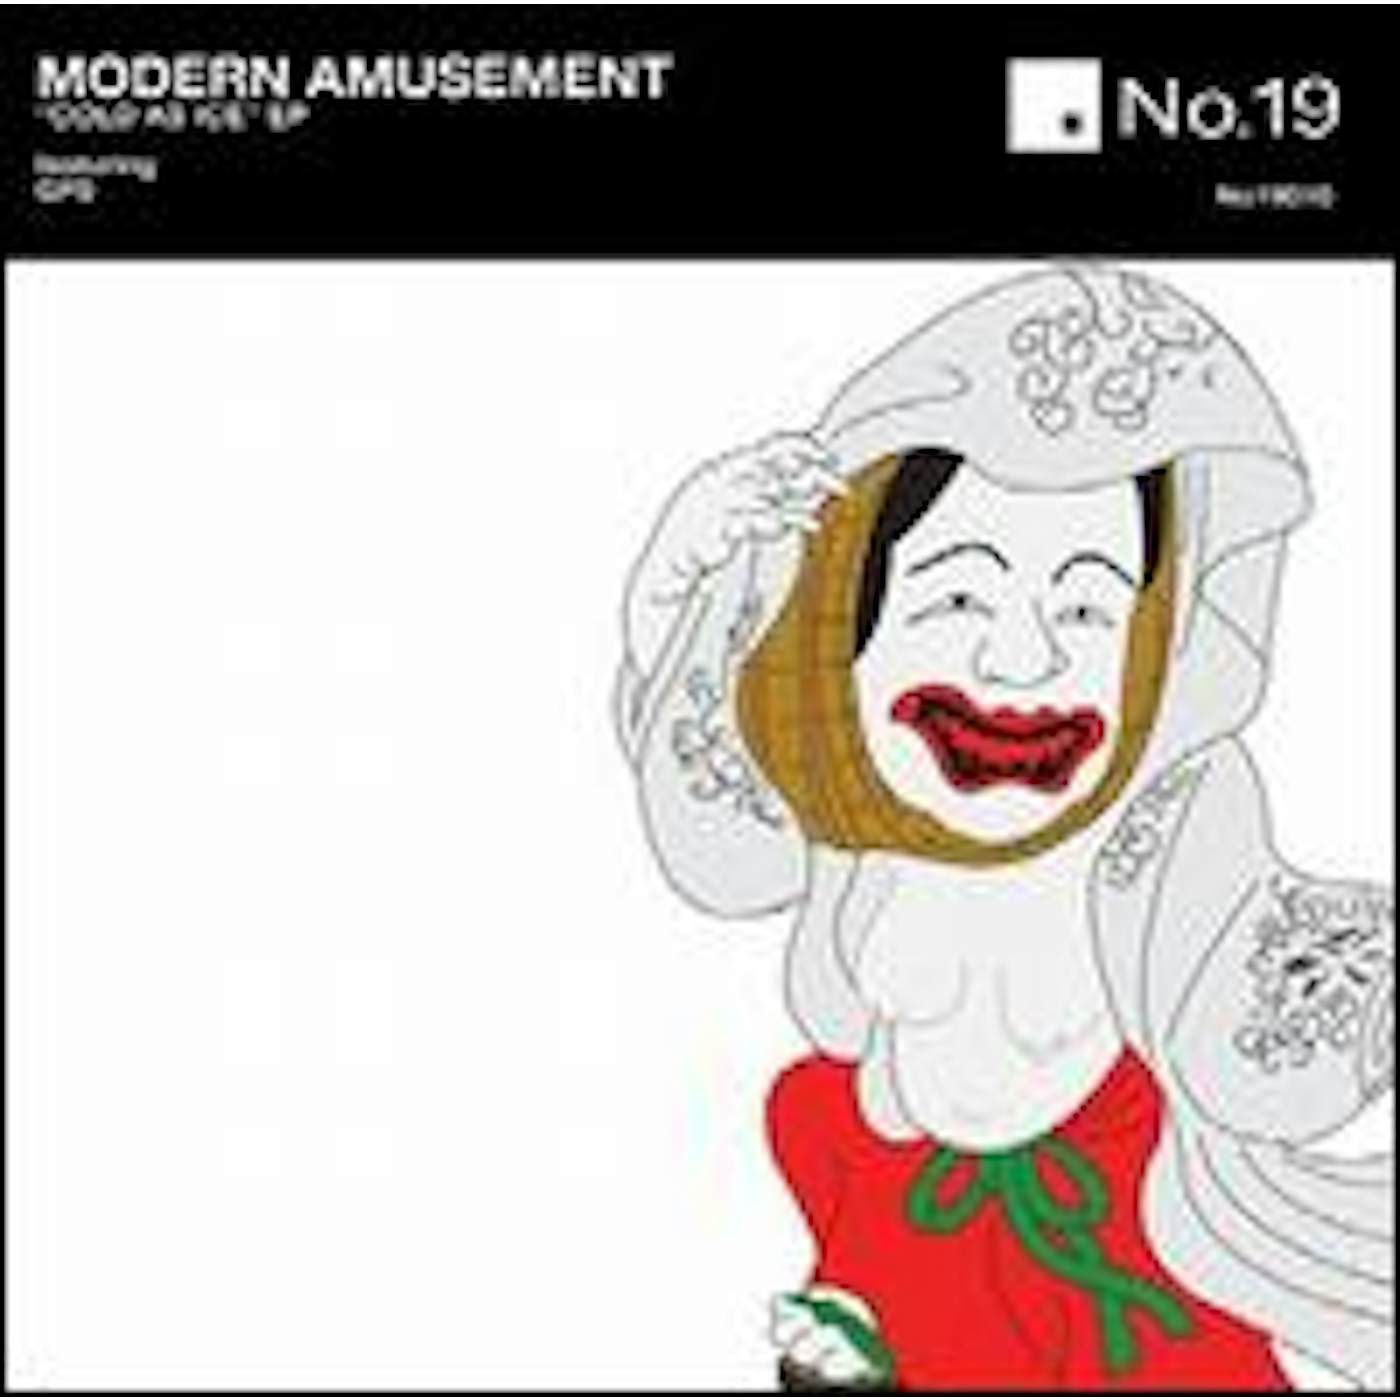 Modern Amusement COLD AS ICE (EP) Vinyl Record